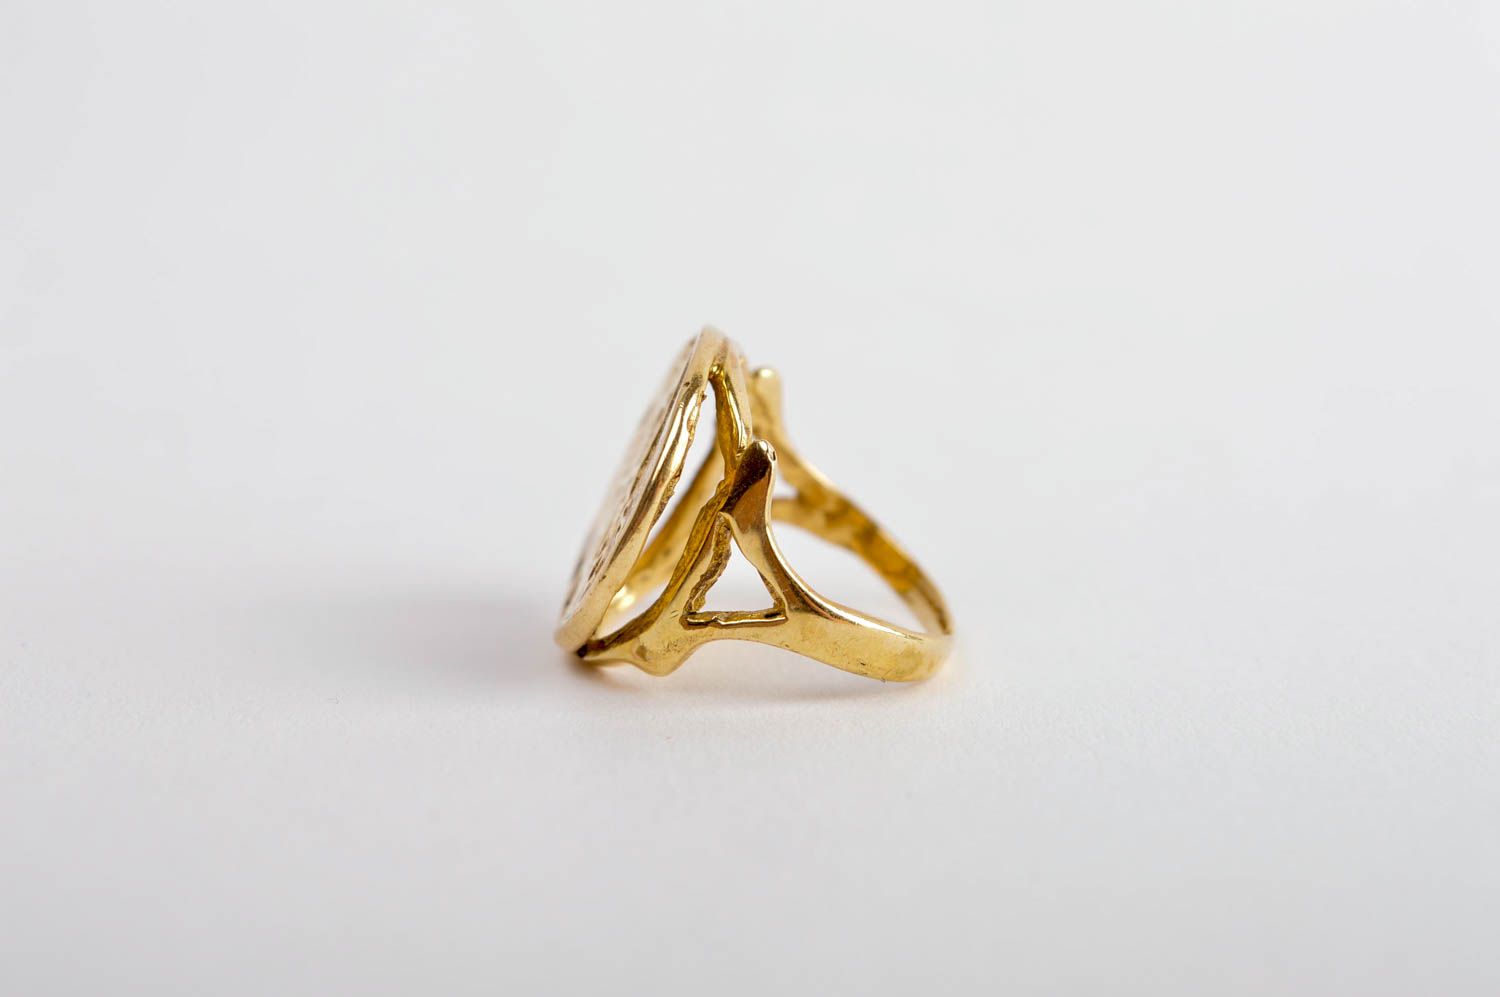 Handmade brass ring stylish elegant jewelry unusual metal ring cute gift photo 3